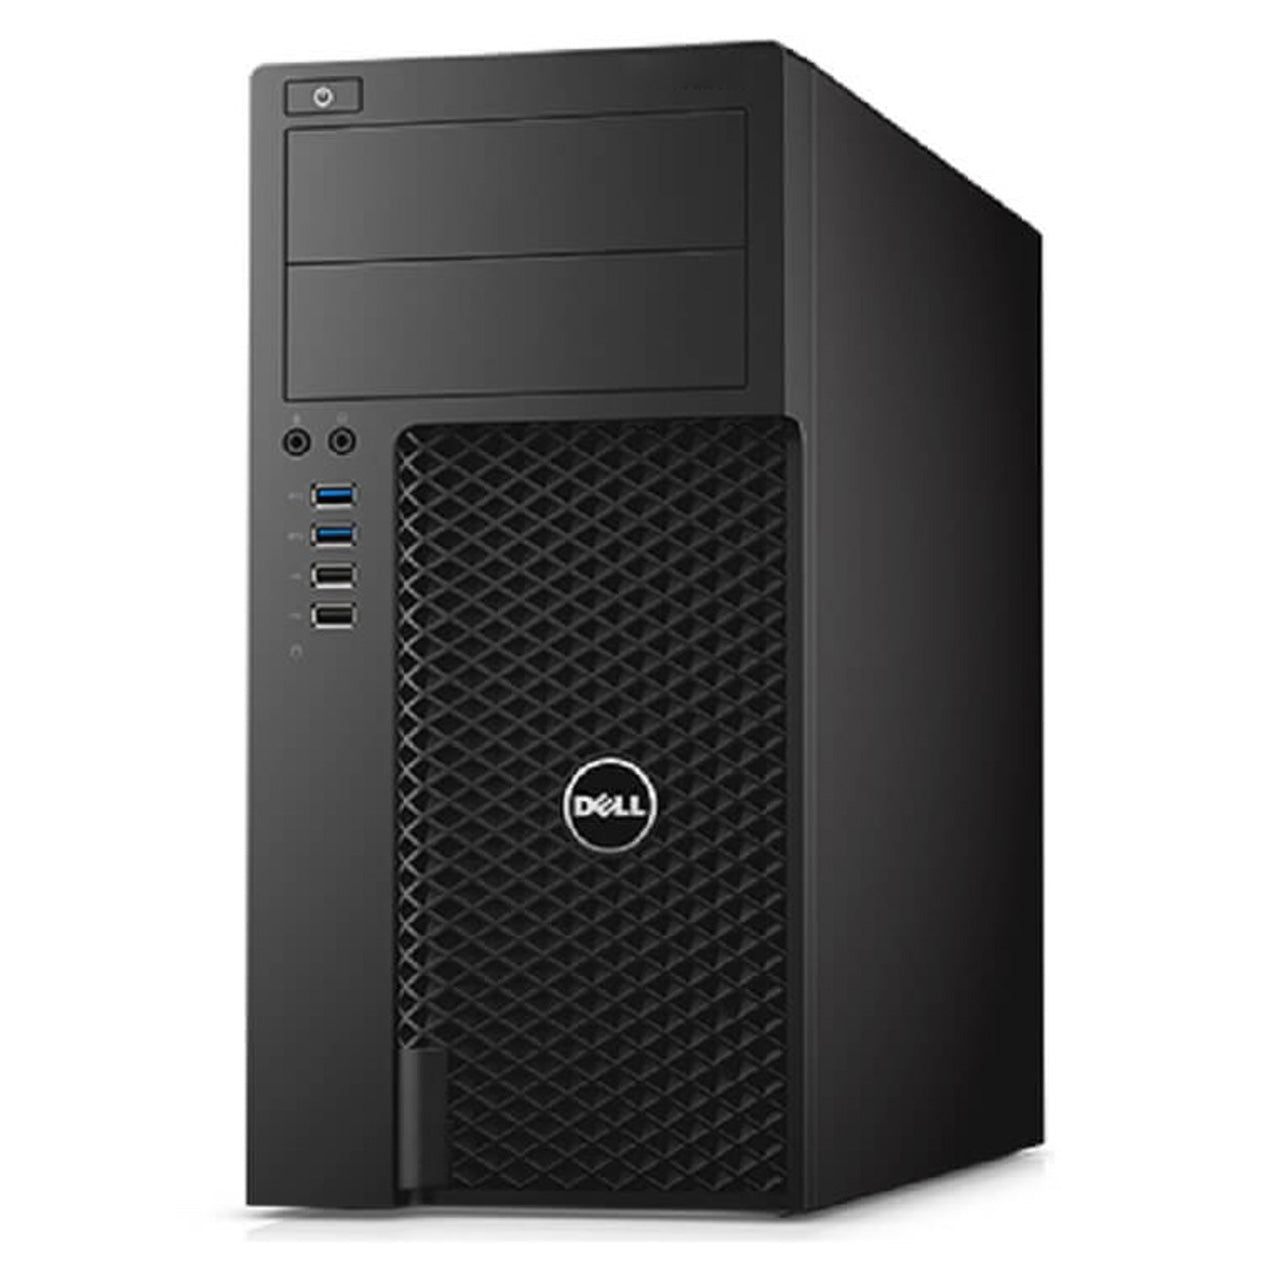 Dell Precision T1700 Tower Gaming Desktop Computer PC| Intel Core i7 - (4770) 4th Gen| 16GB - 32GB DDR3 RAM| 512GB -2TB SSD| Windows 10 Pro| RX550, GT1030, GTX 1630, 1050Ti, 1650 - Refurbished